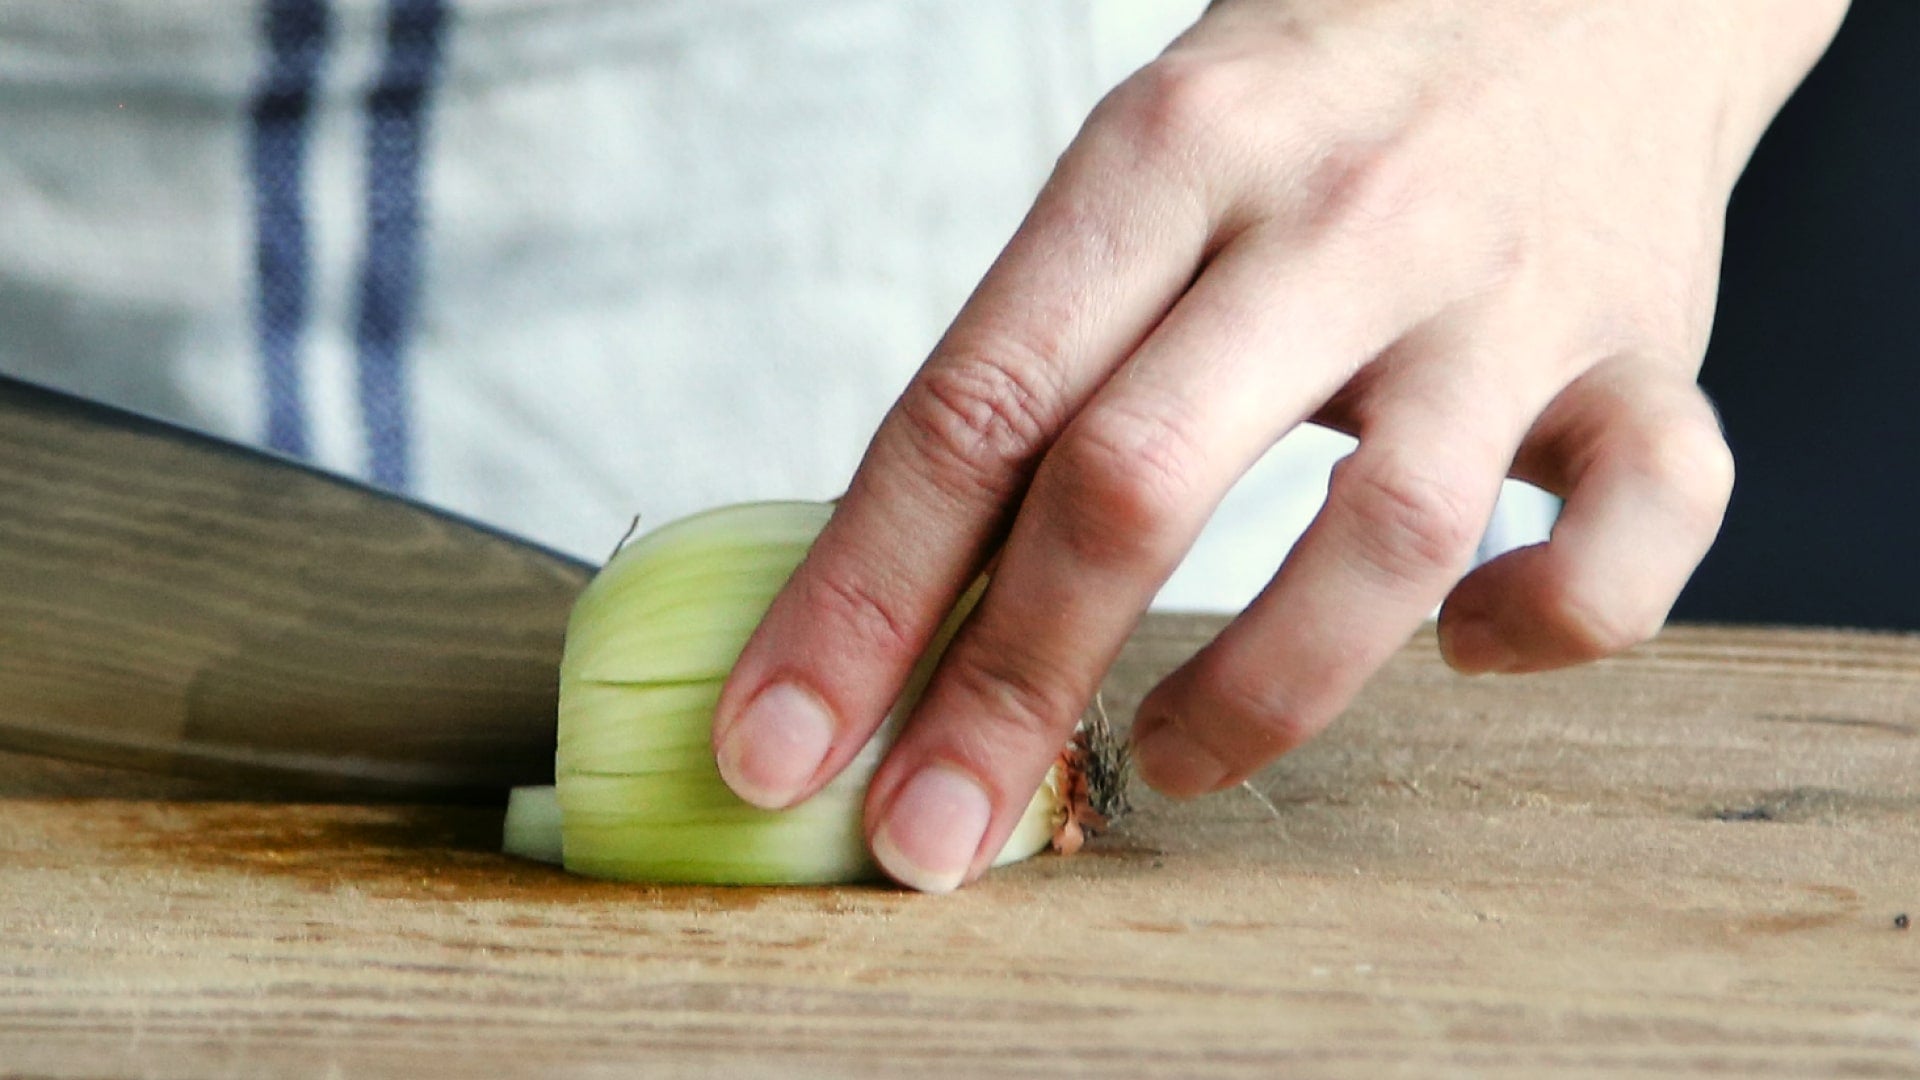 Goggles for cutting onions. : r/mildlyinteresting